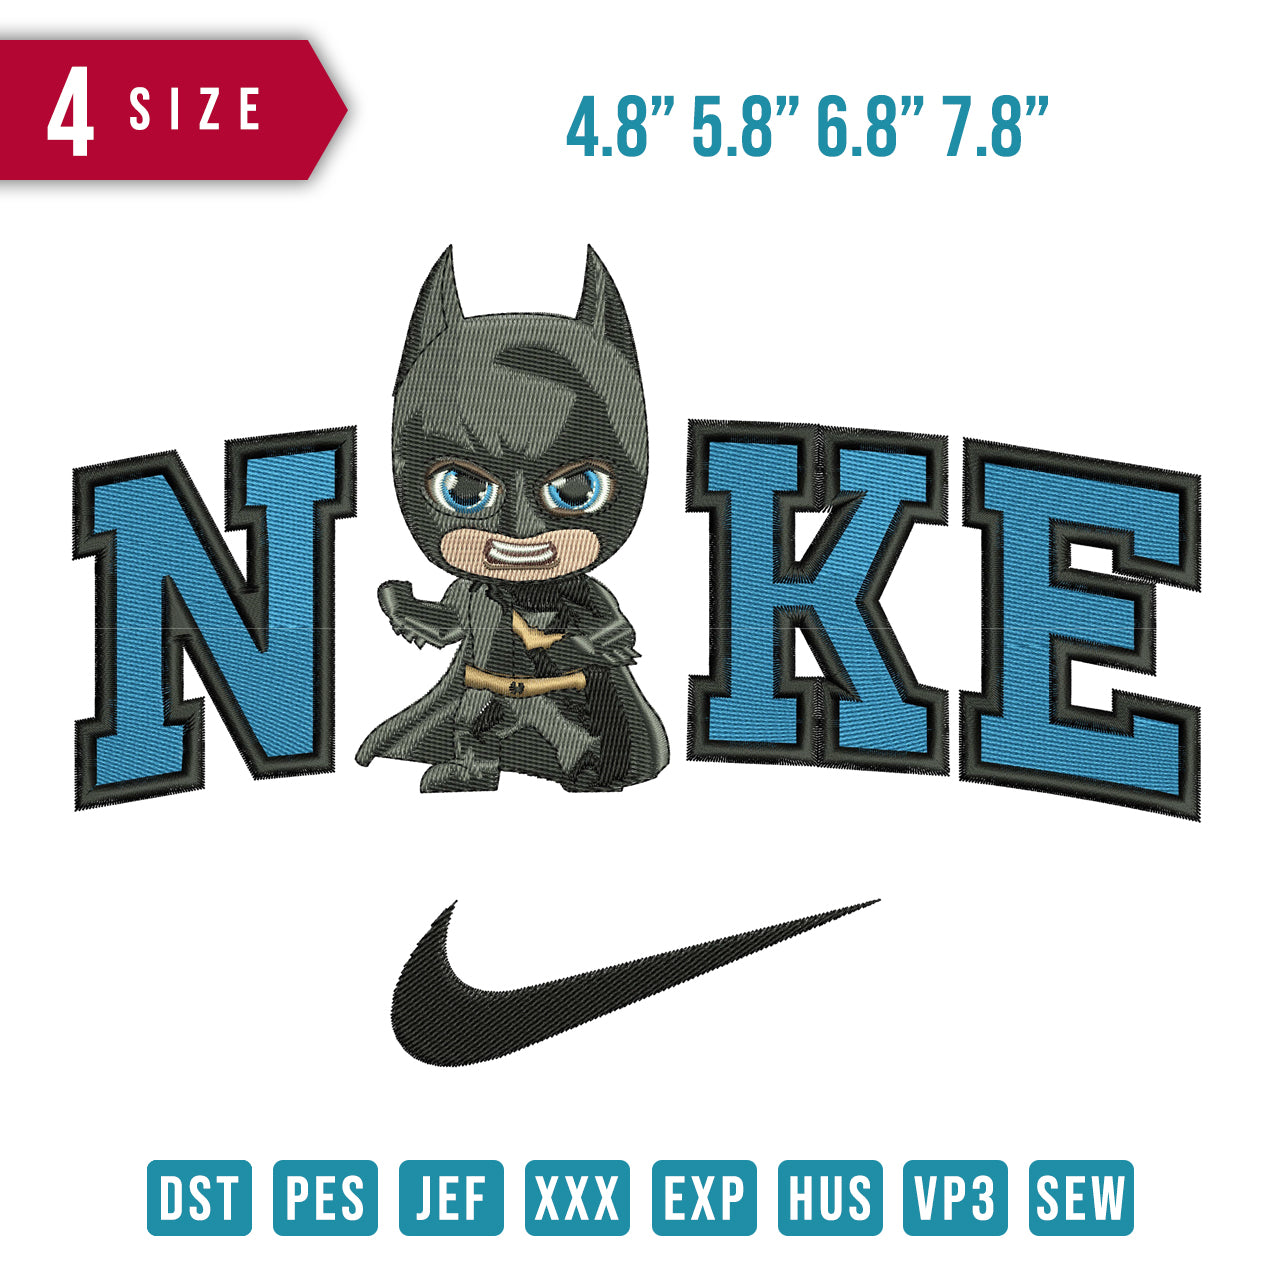 Nike Batman Chibi